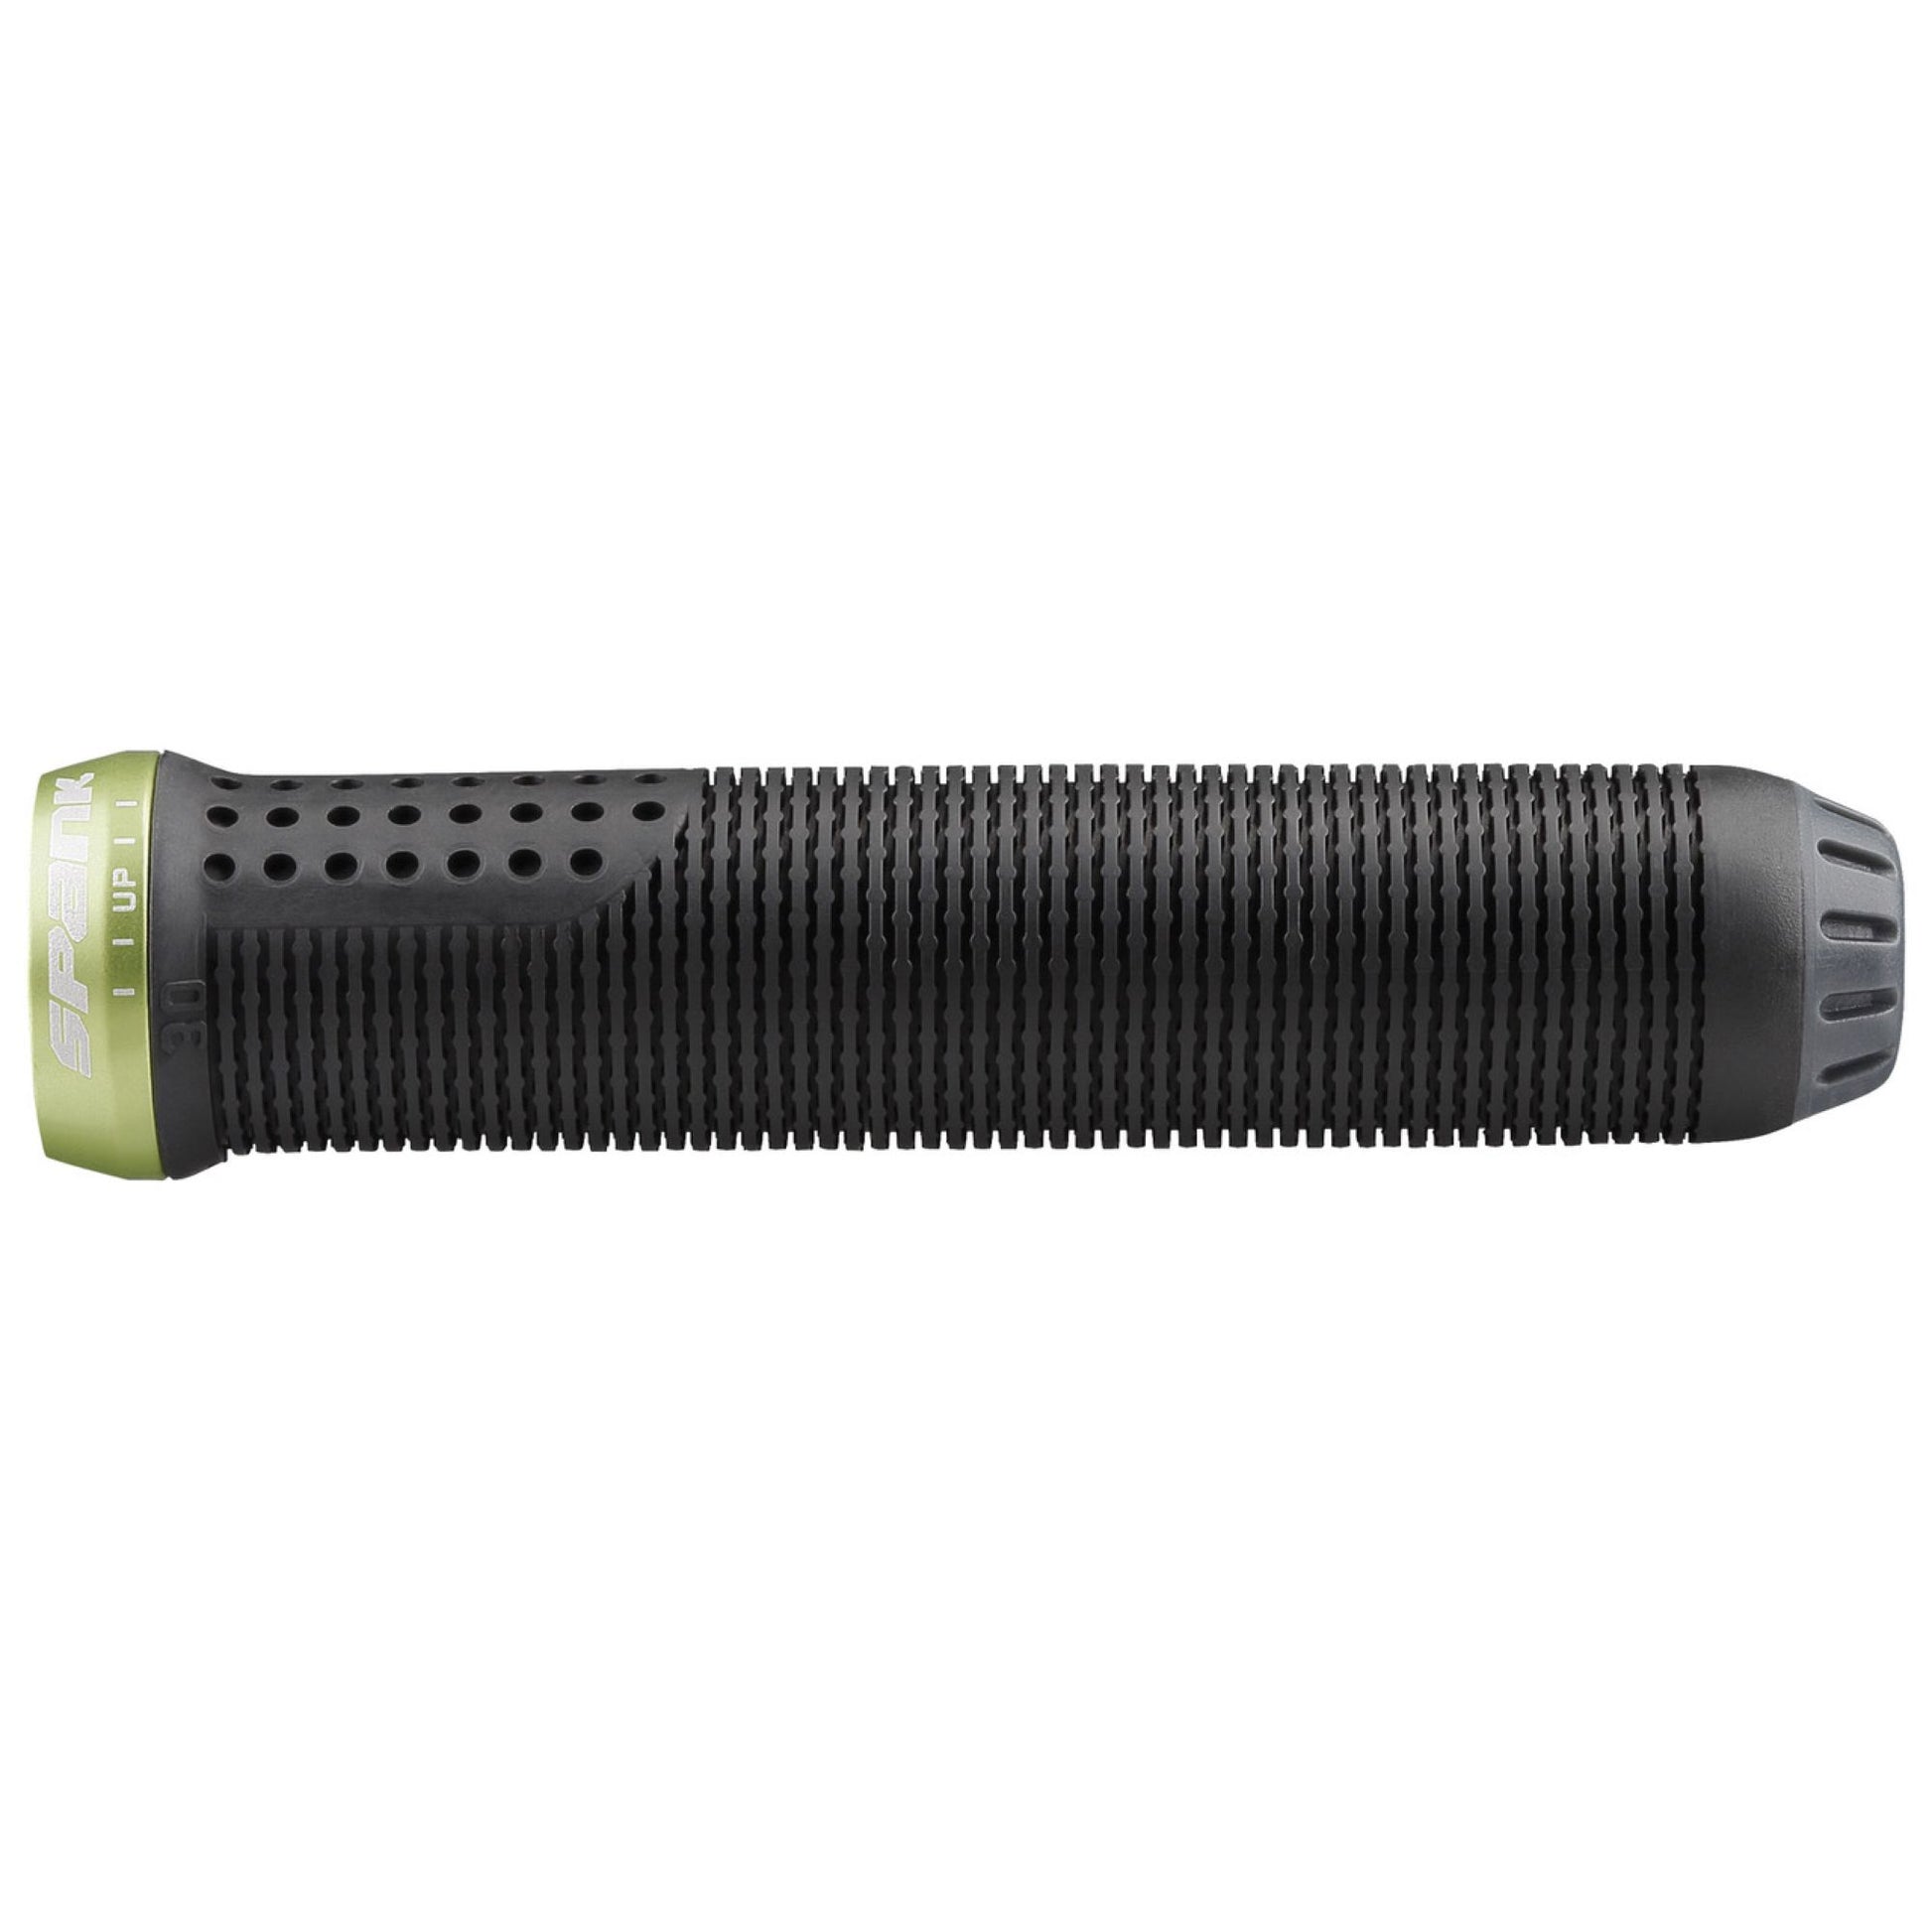 Spank Spike Grip 30 Black Green 30x145mm Grips & Tape